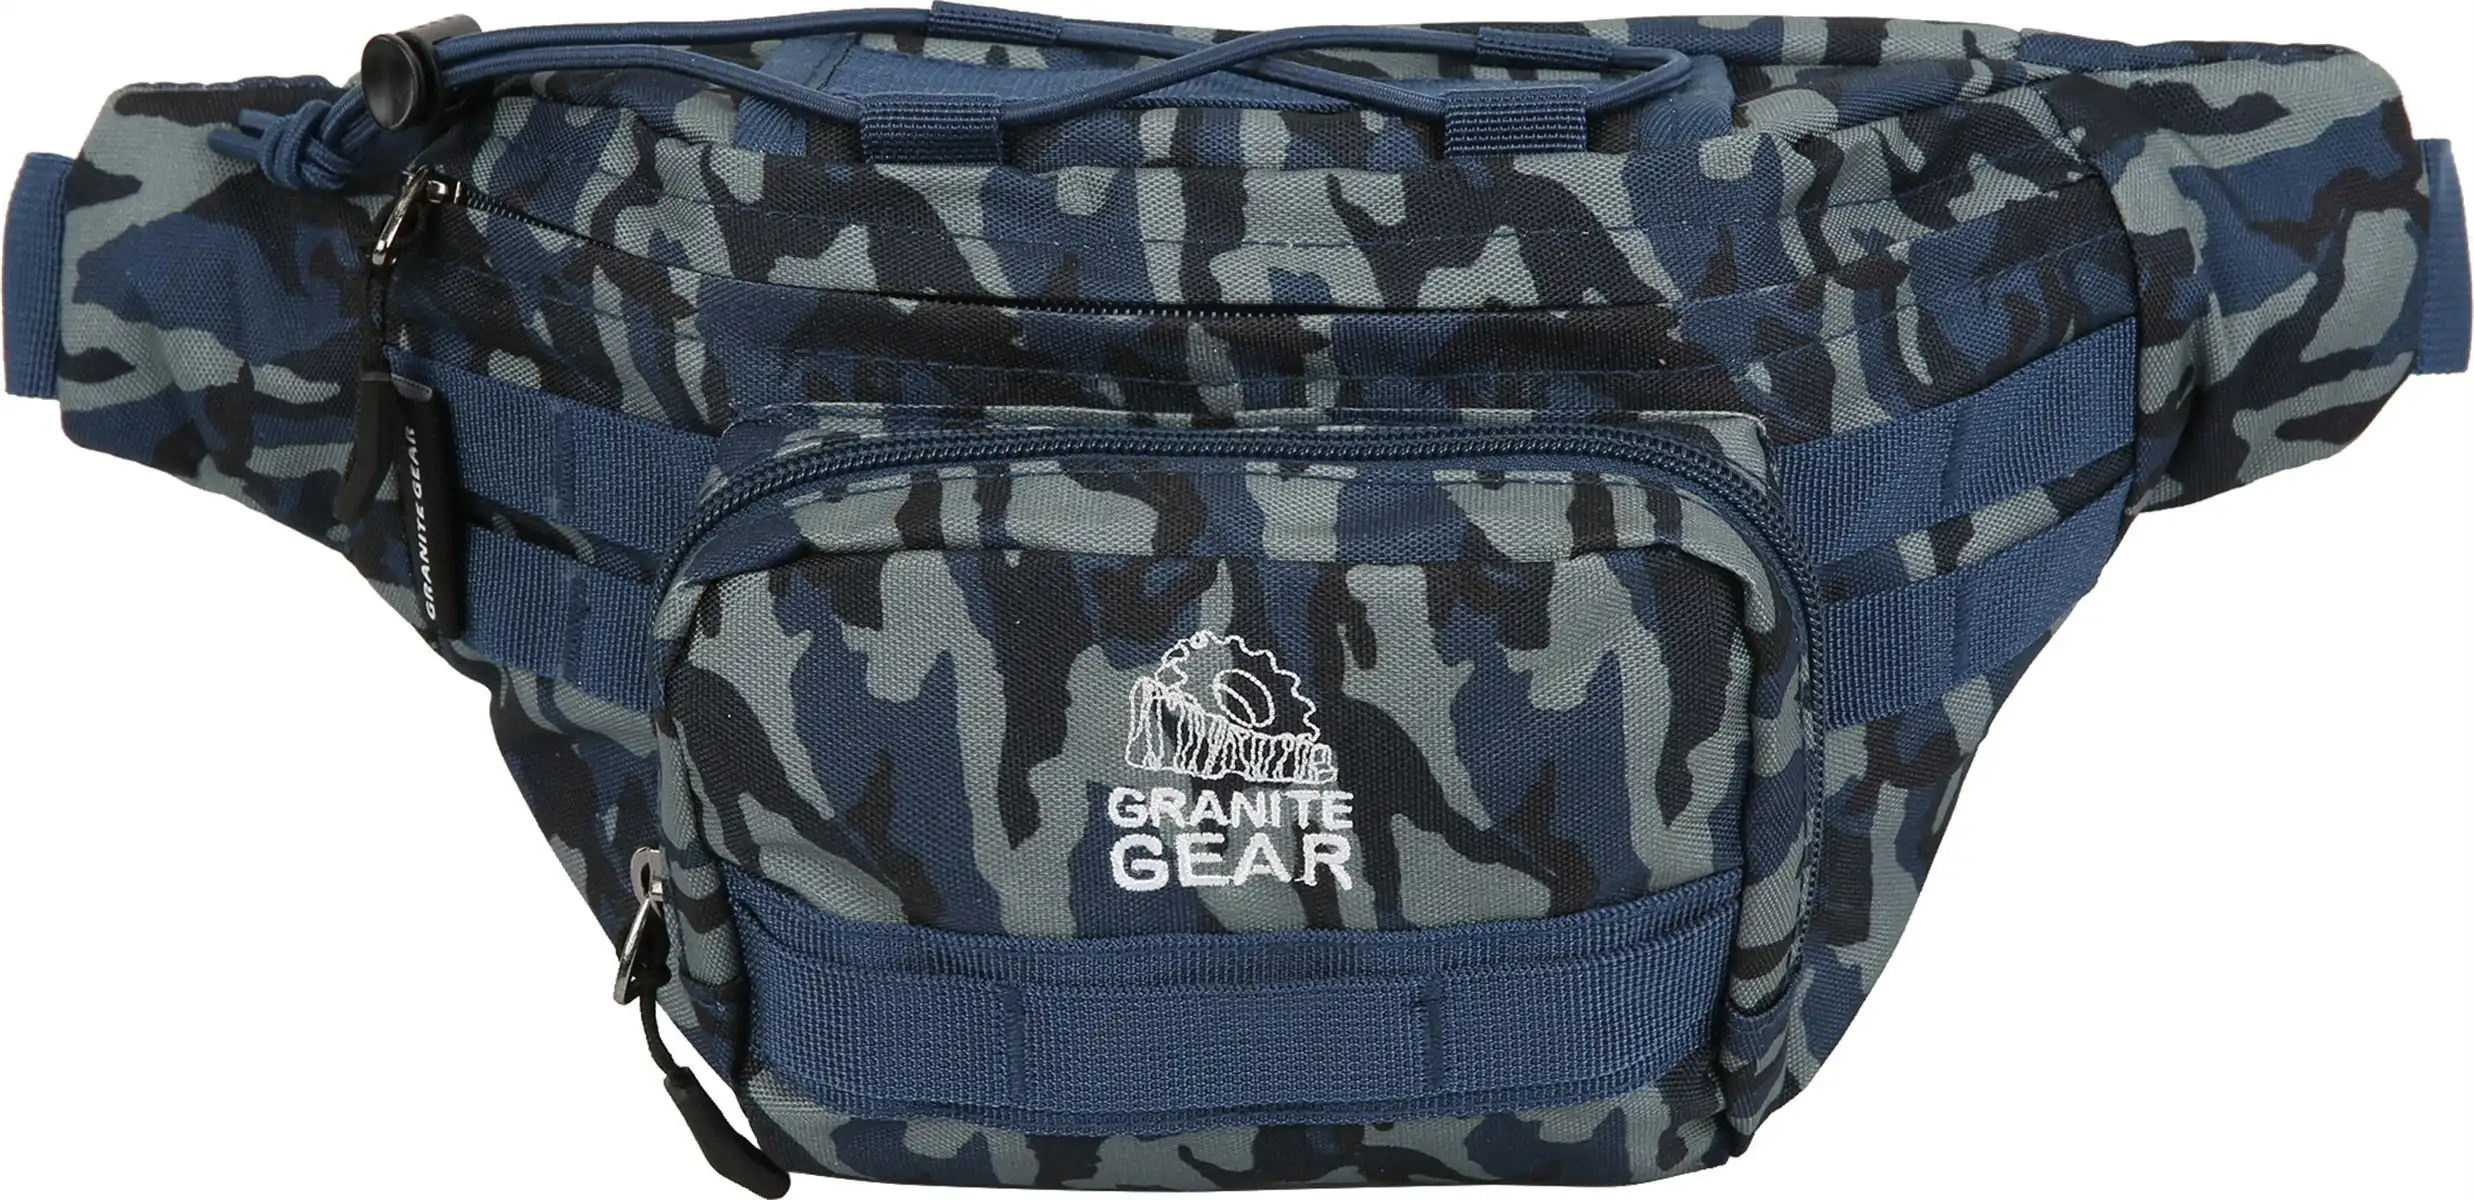 Granite Gear Waterproof Funny Bag Travel Bum Bag Camping Hiking Cross Shoulder Bag G7557 Camouflage Blue